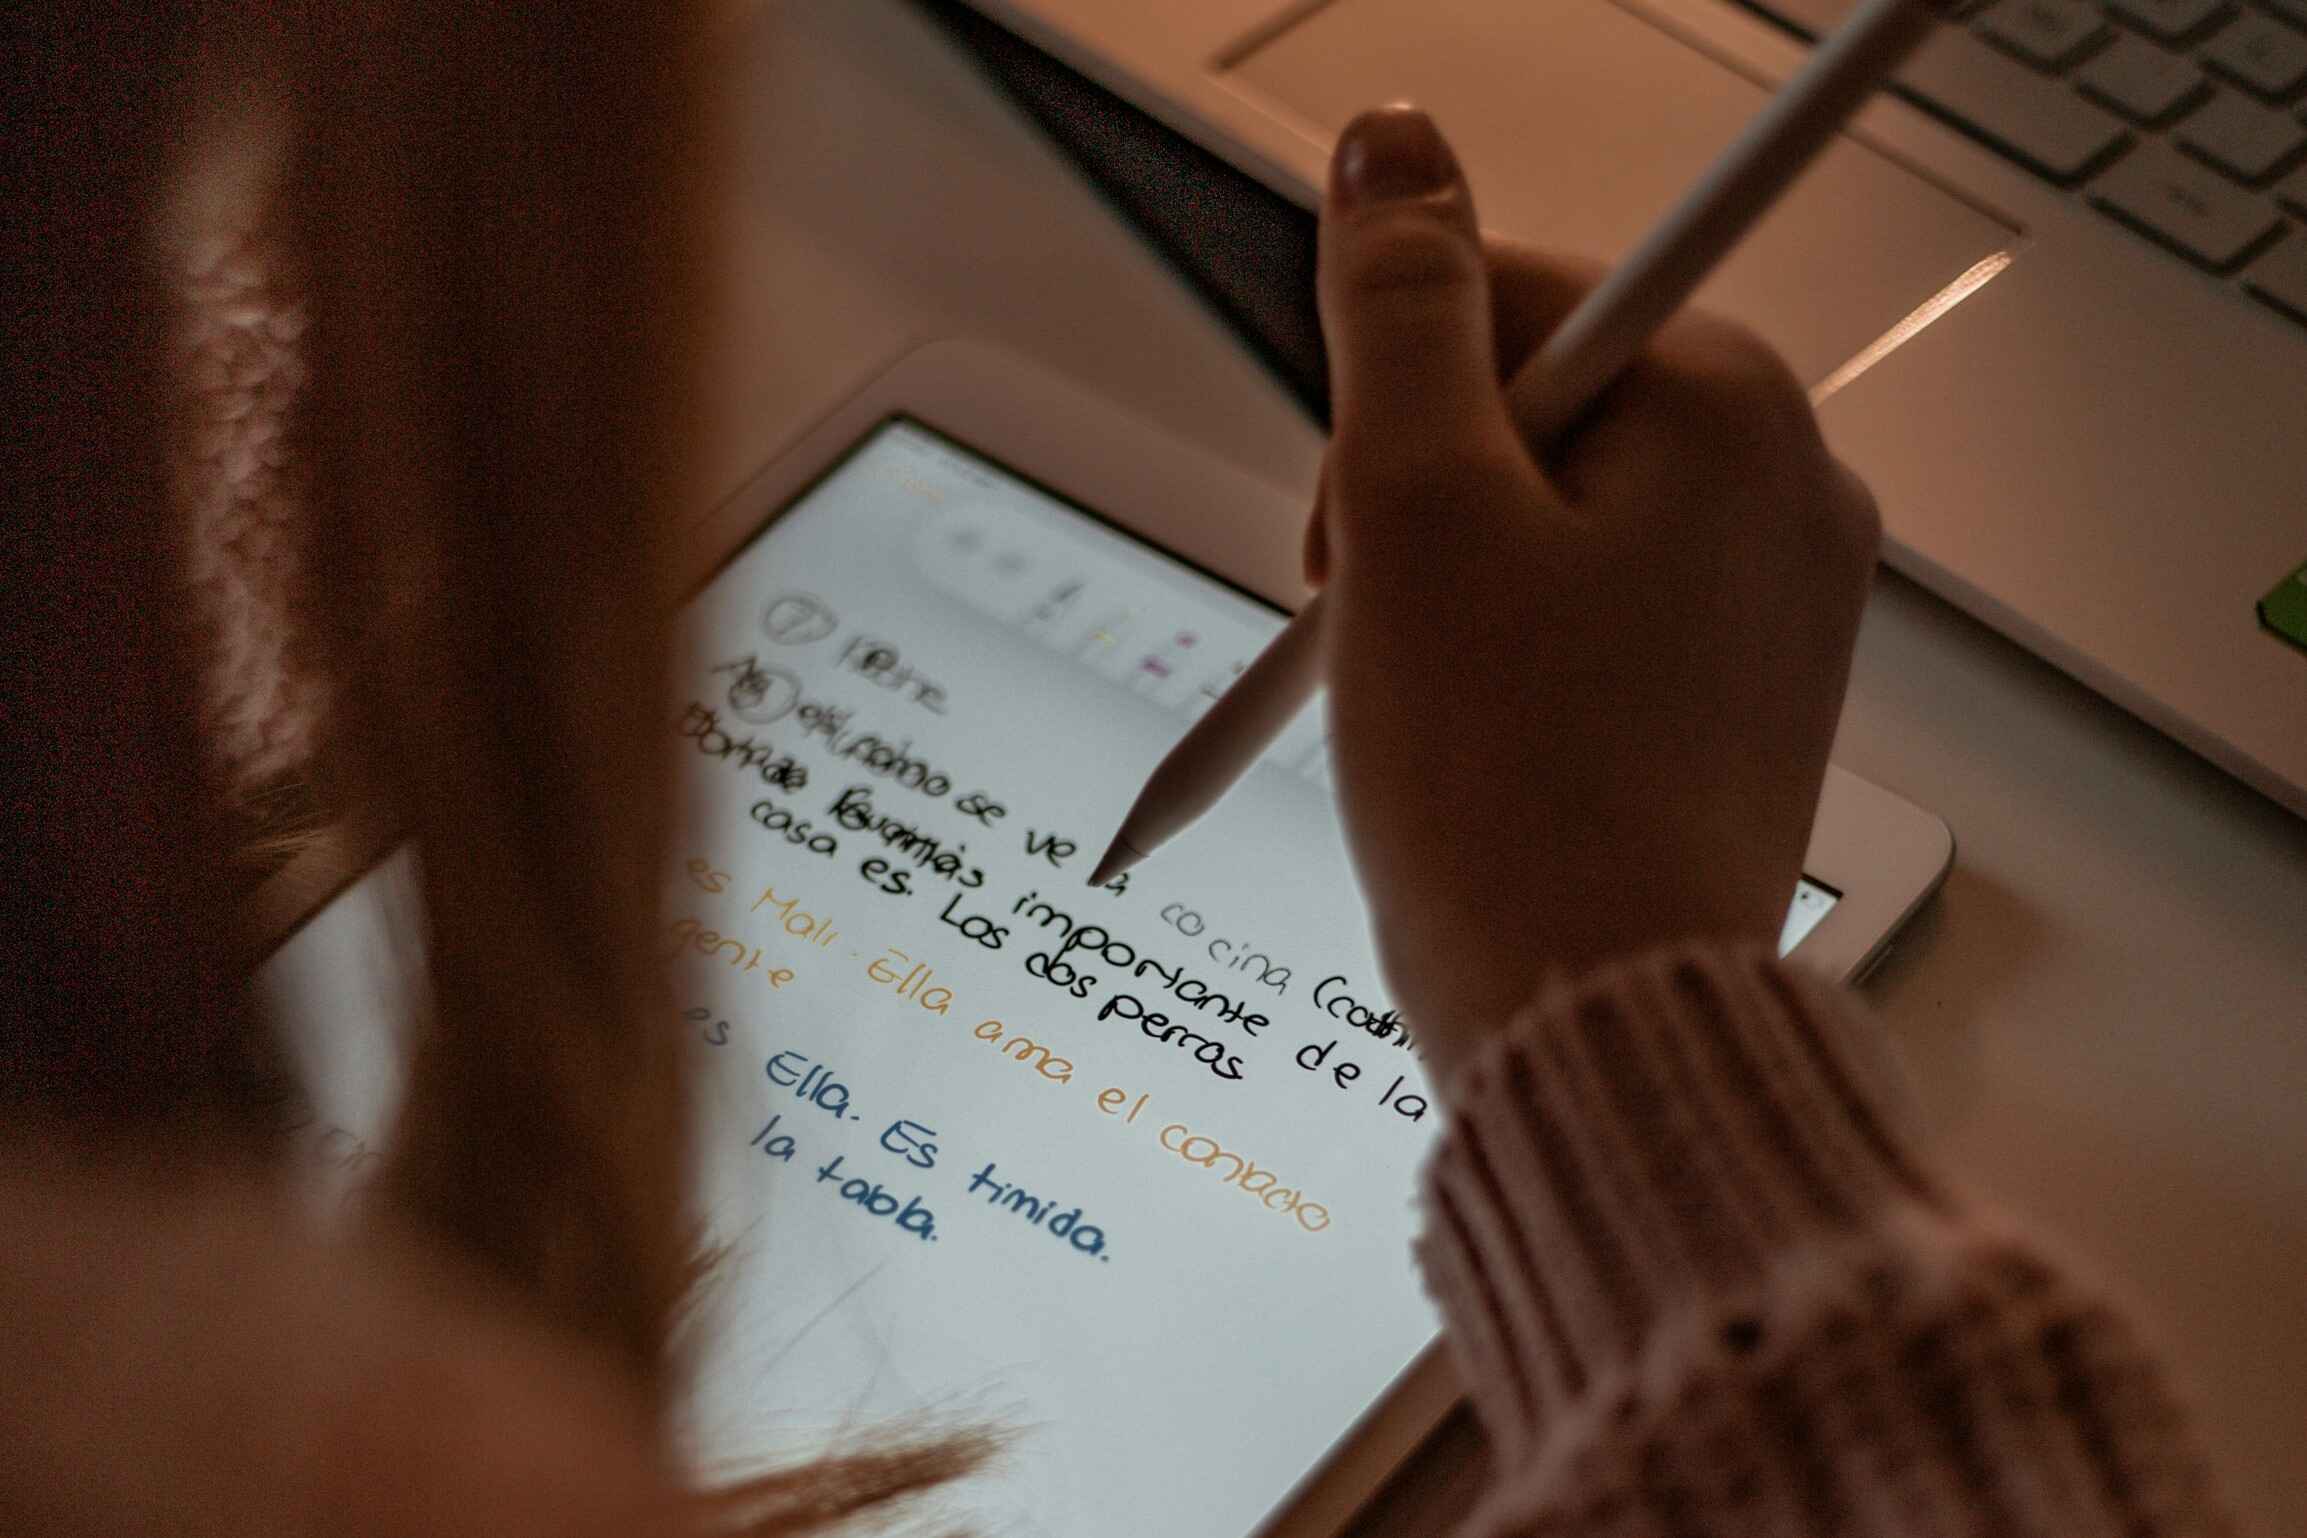 Woman writing on an iPad using a stylist